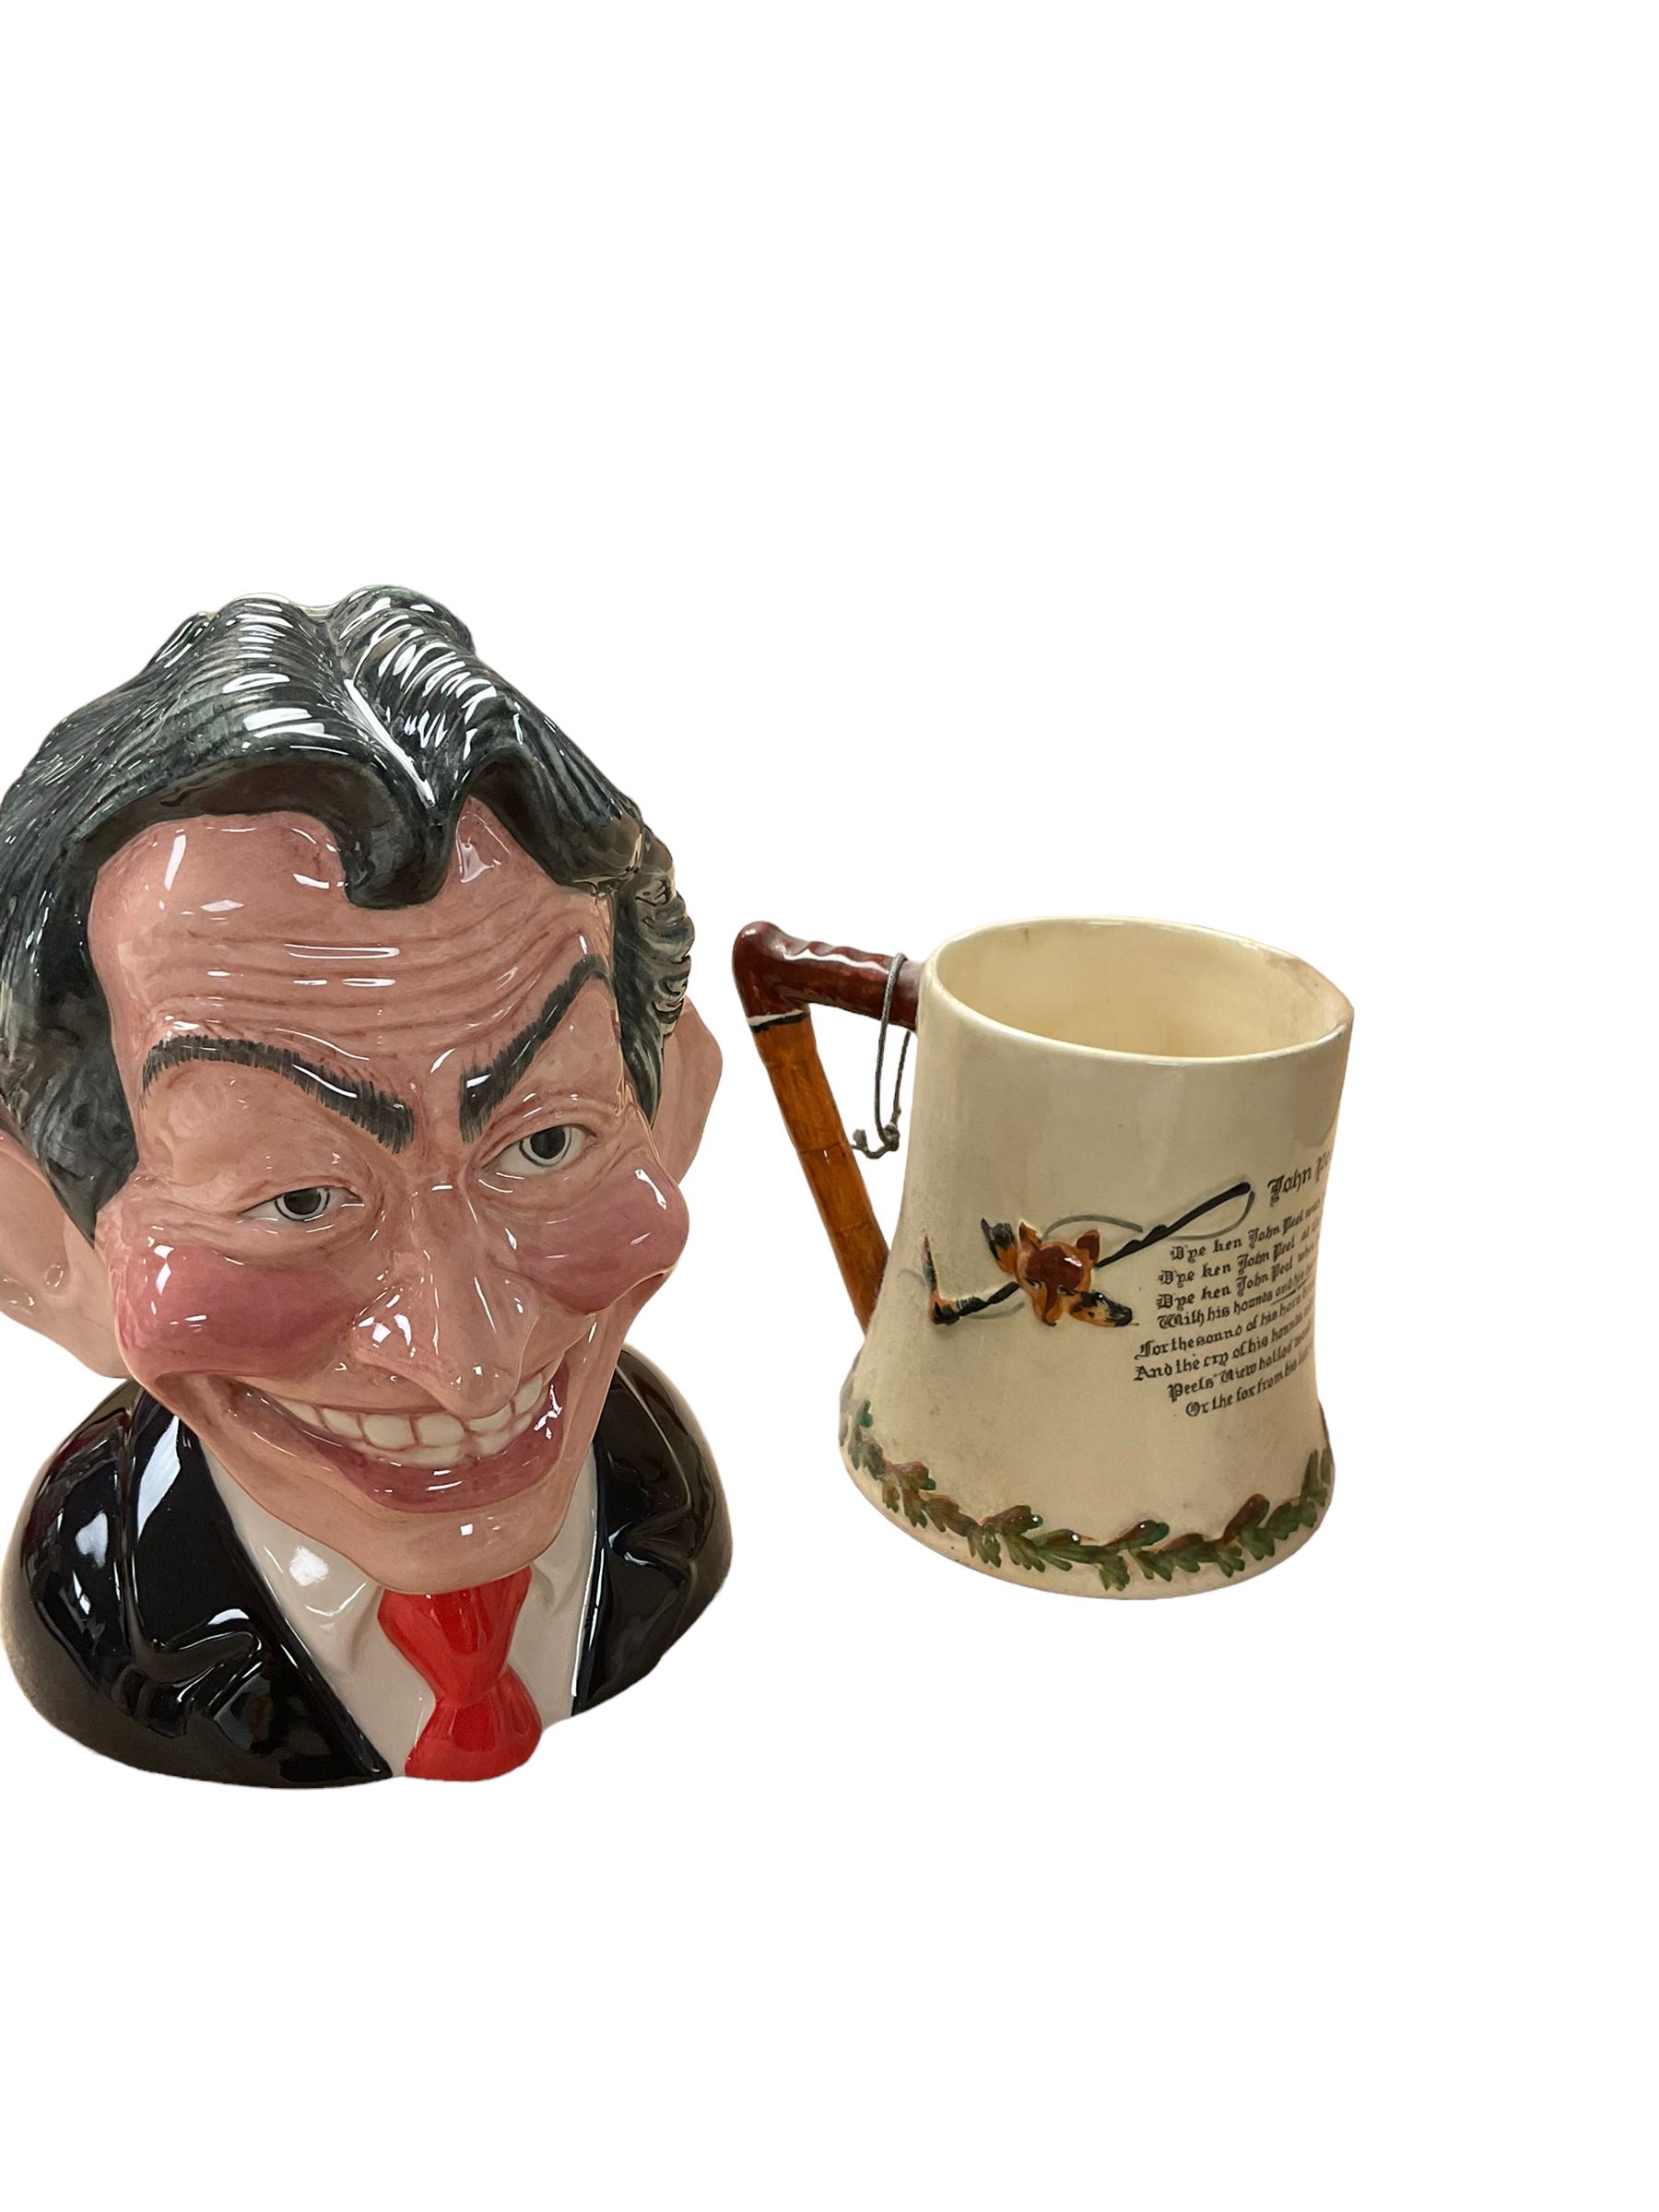 Crown Devon John Peel mug - Image 3 of 3